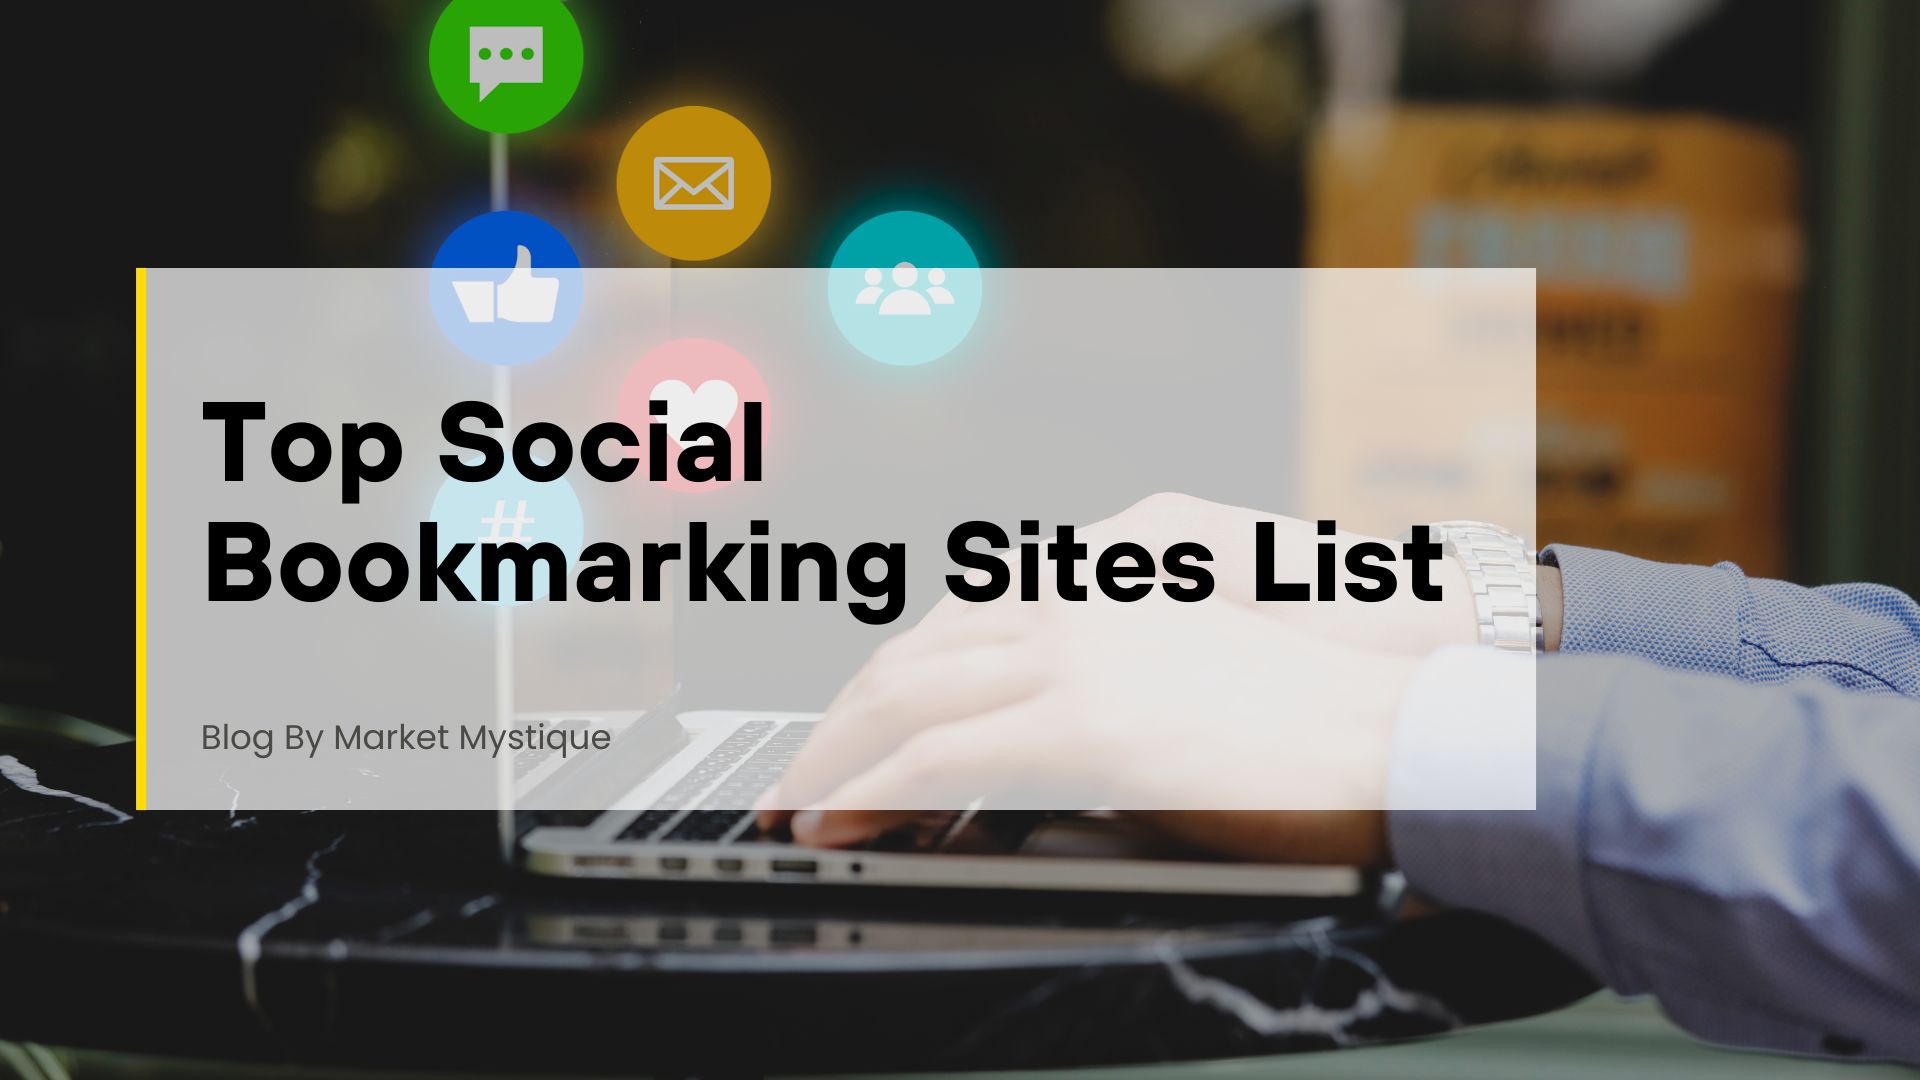 Top Social Bookmarking Sites List